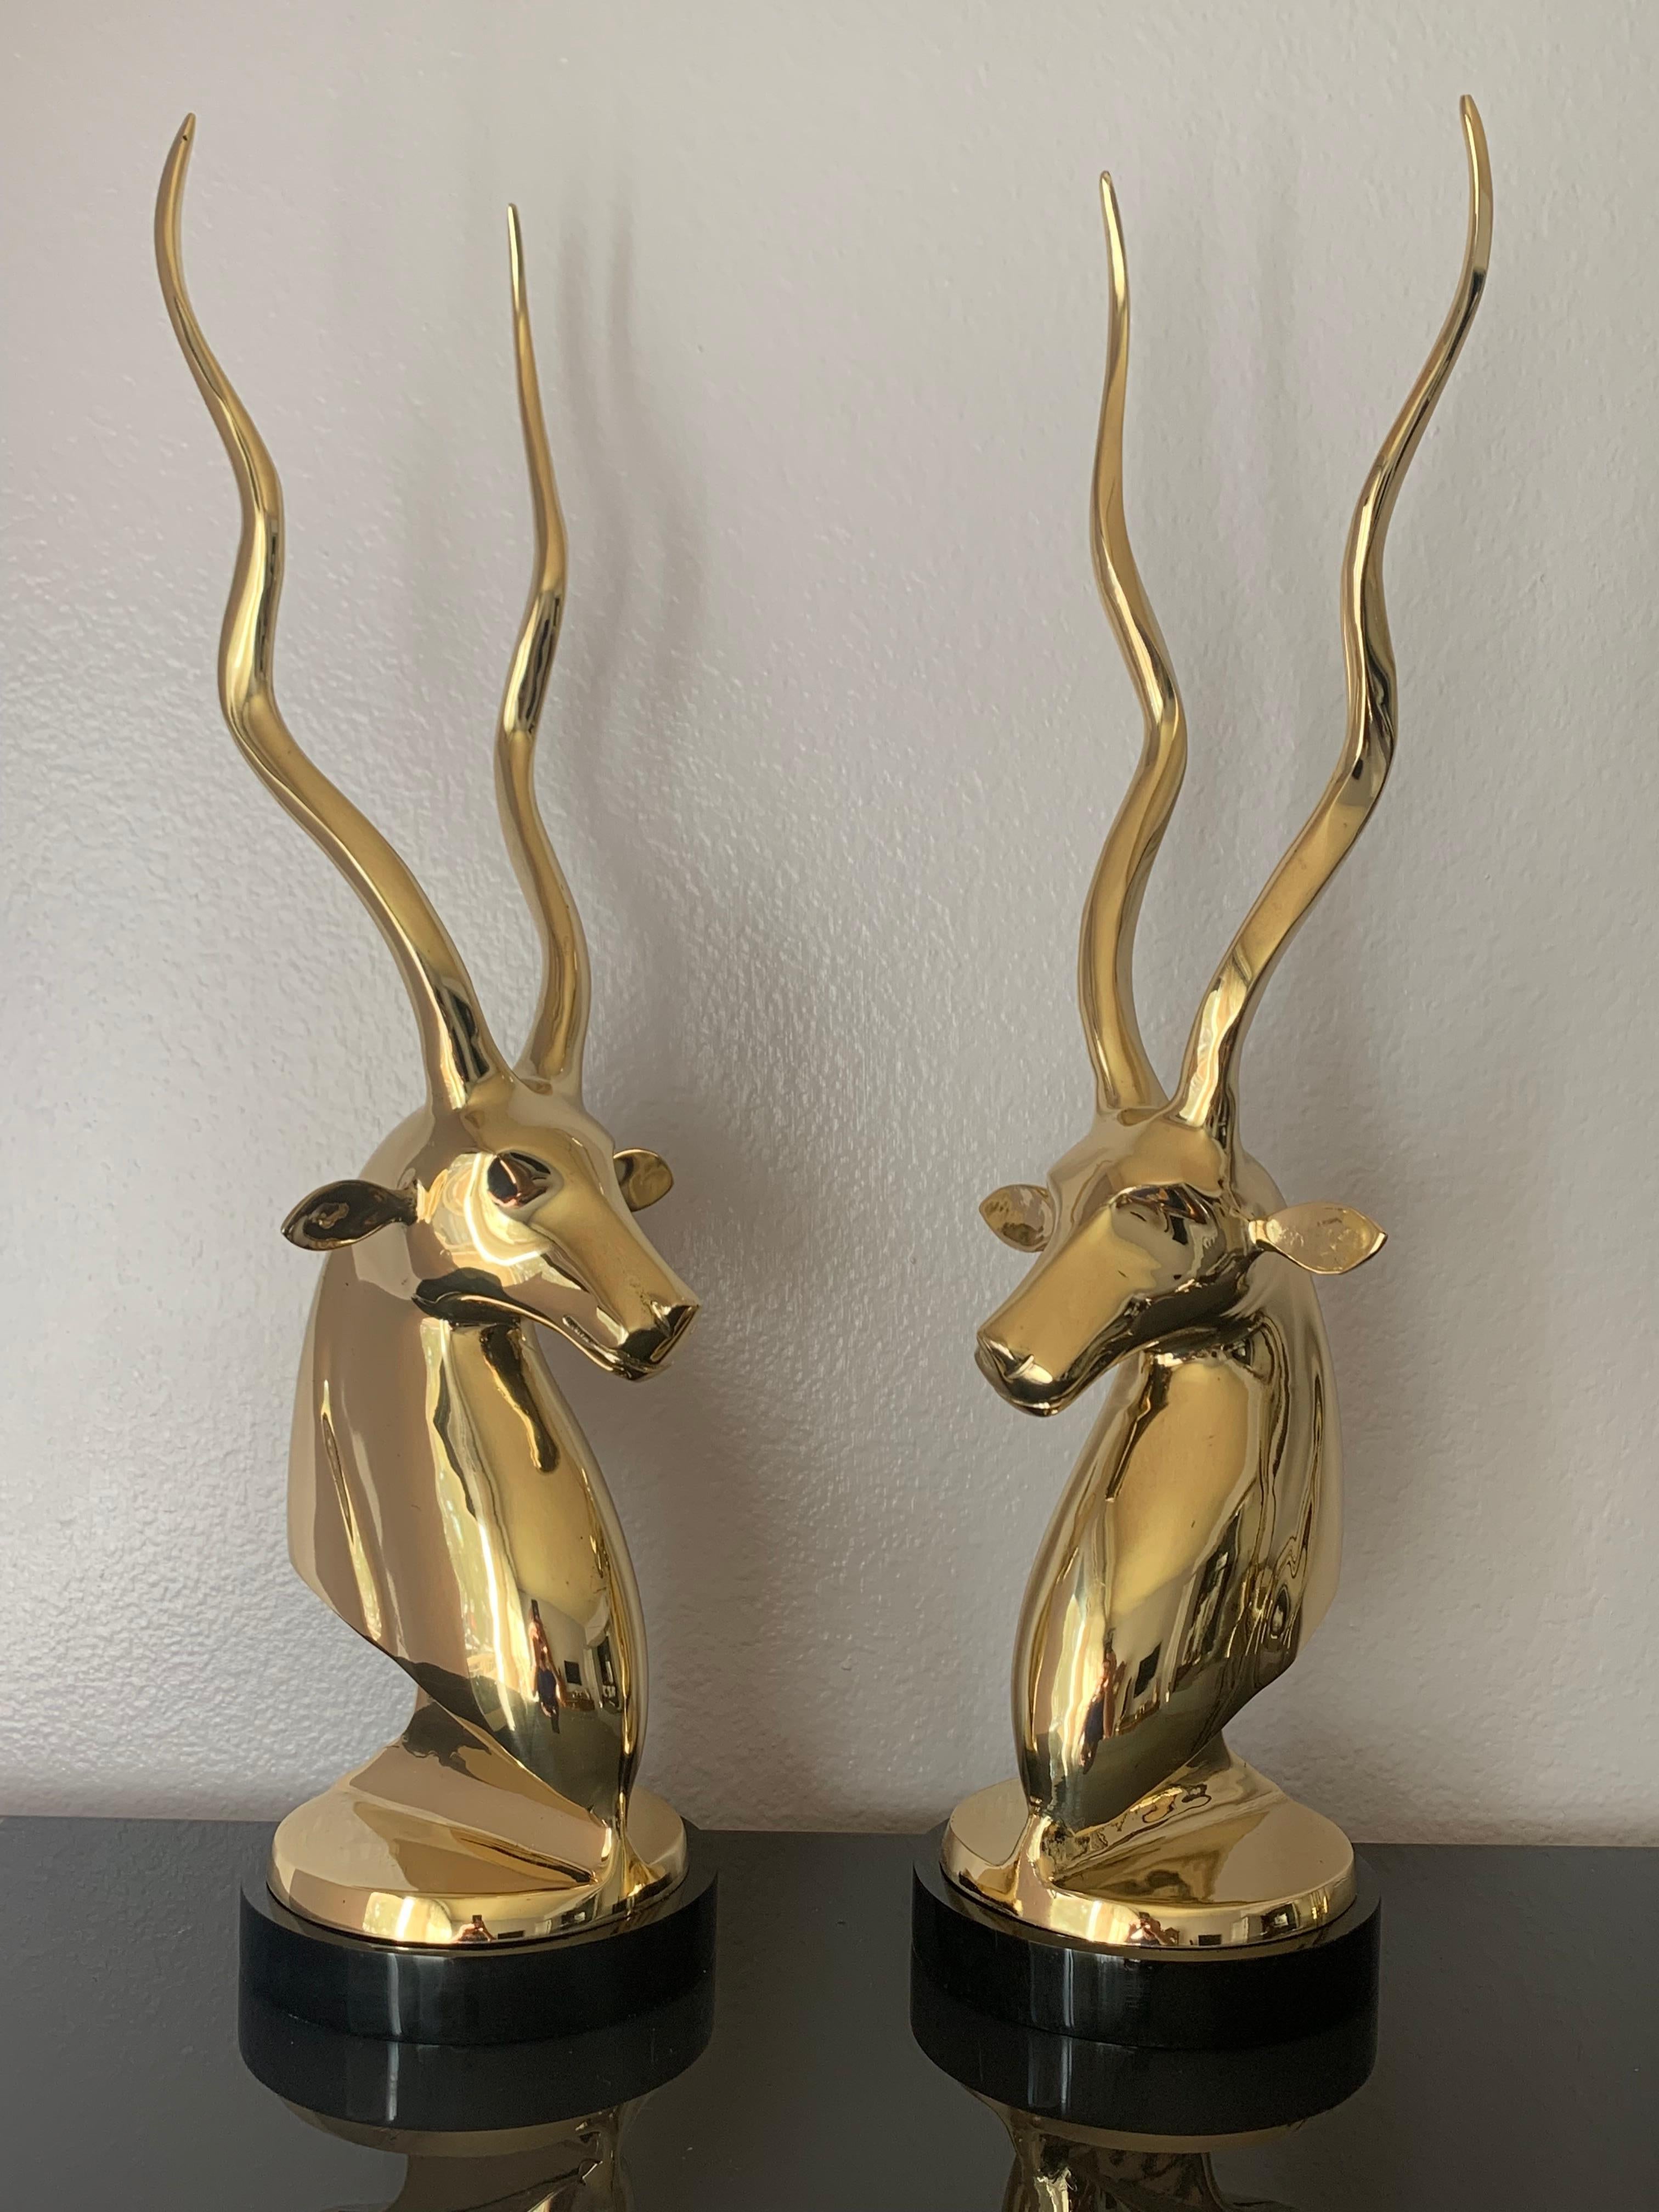 Polished Pair of Brass Kudu or Antelope Busts